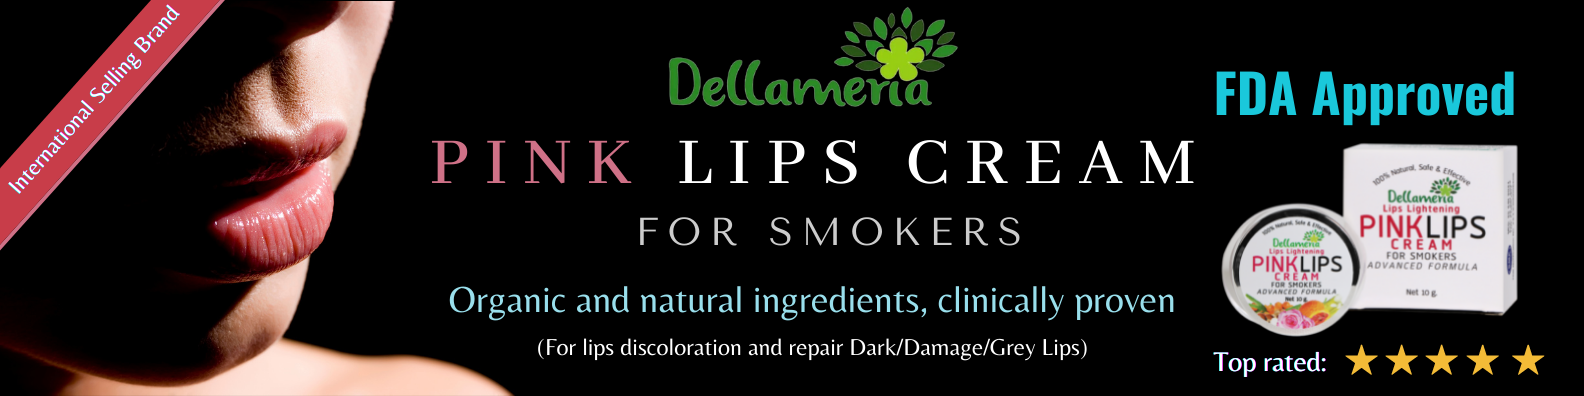 lip cream ad banner